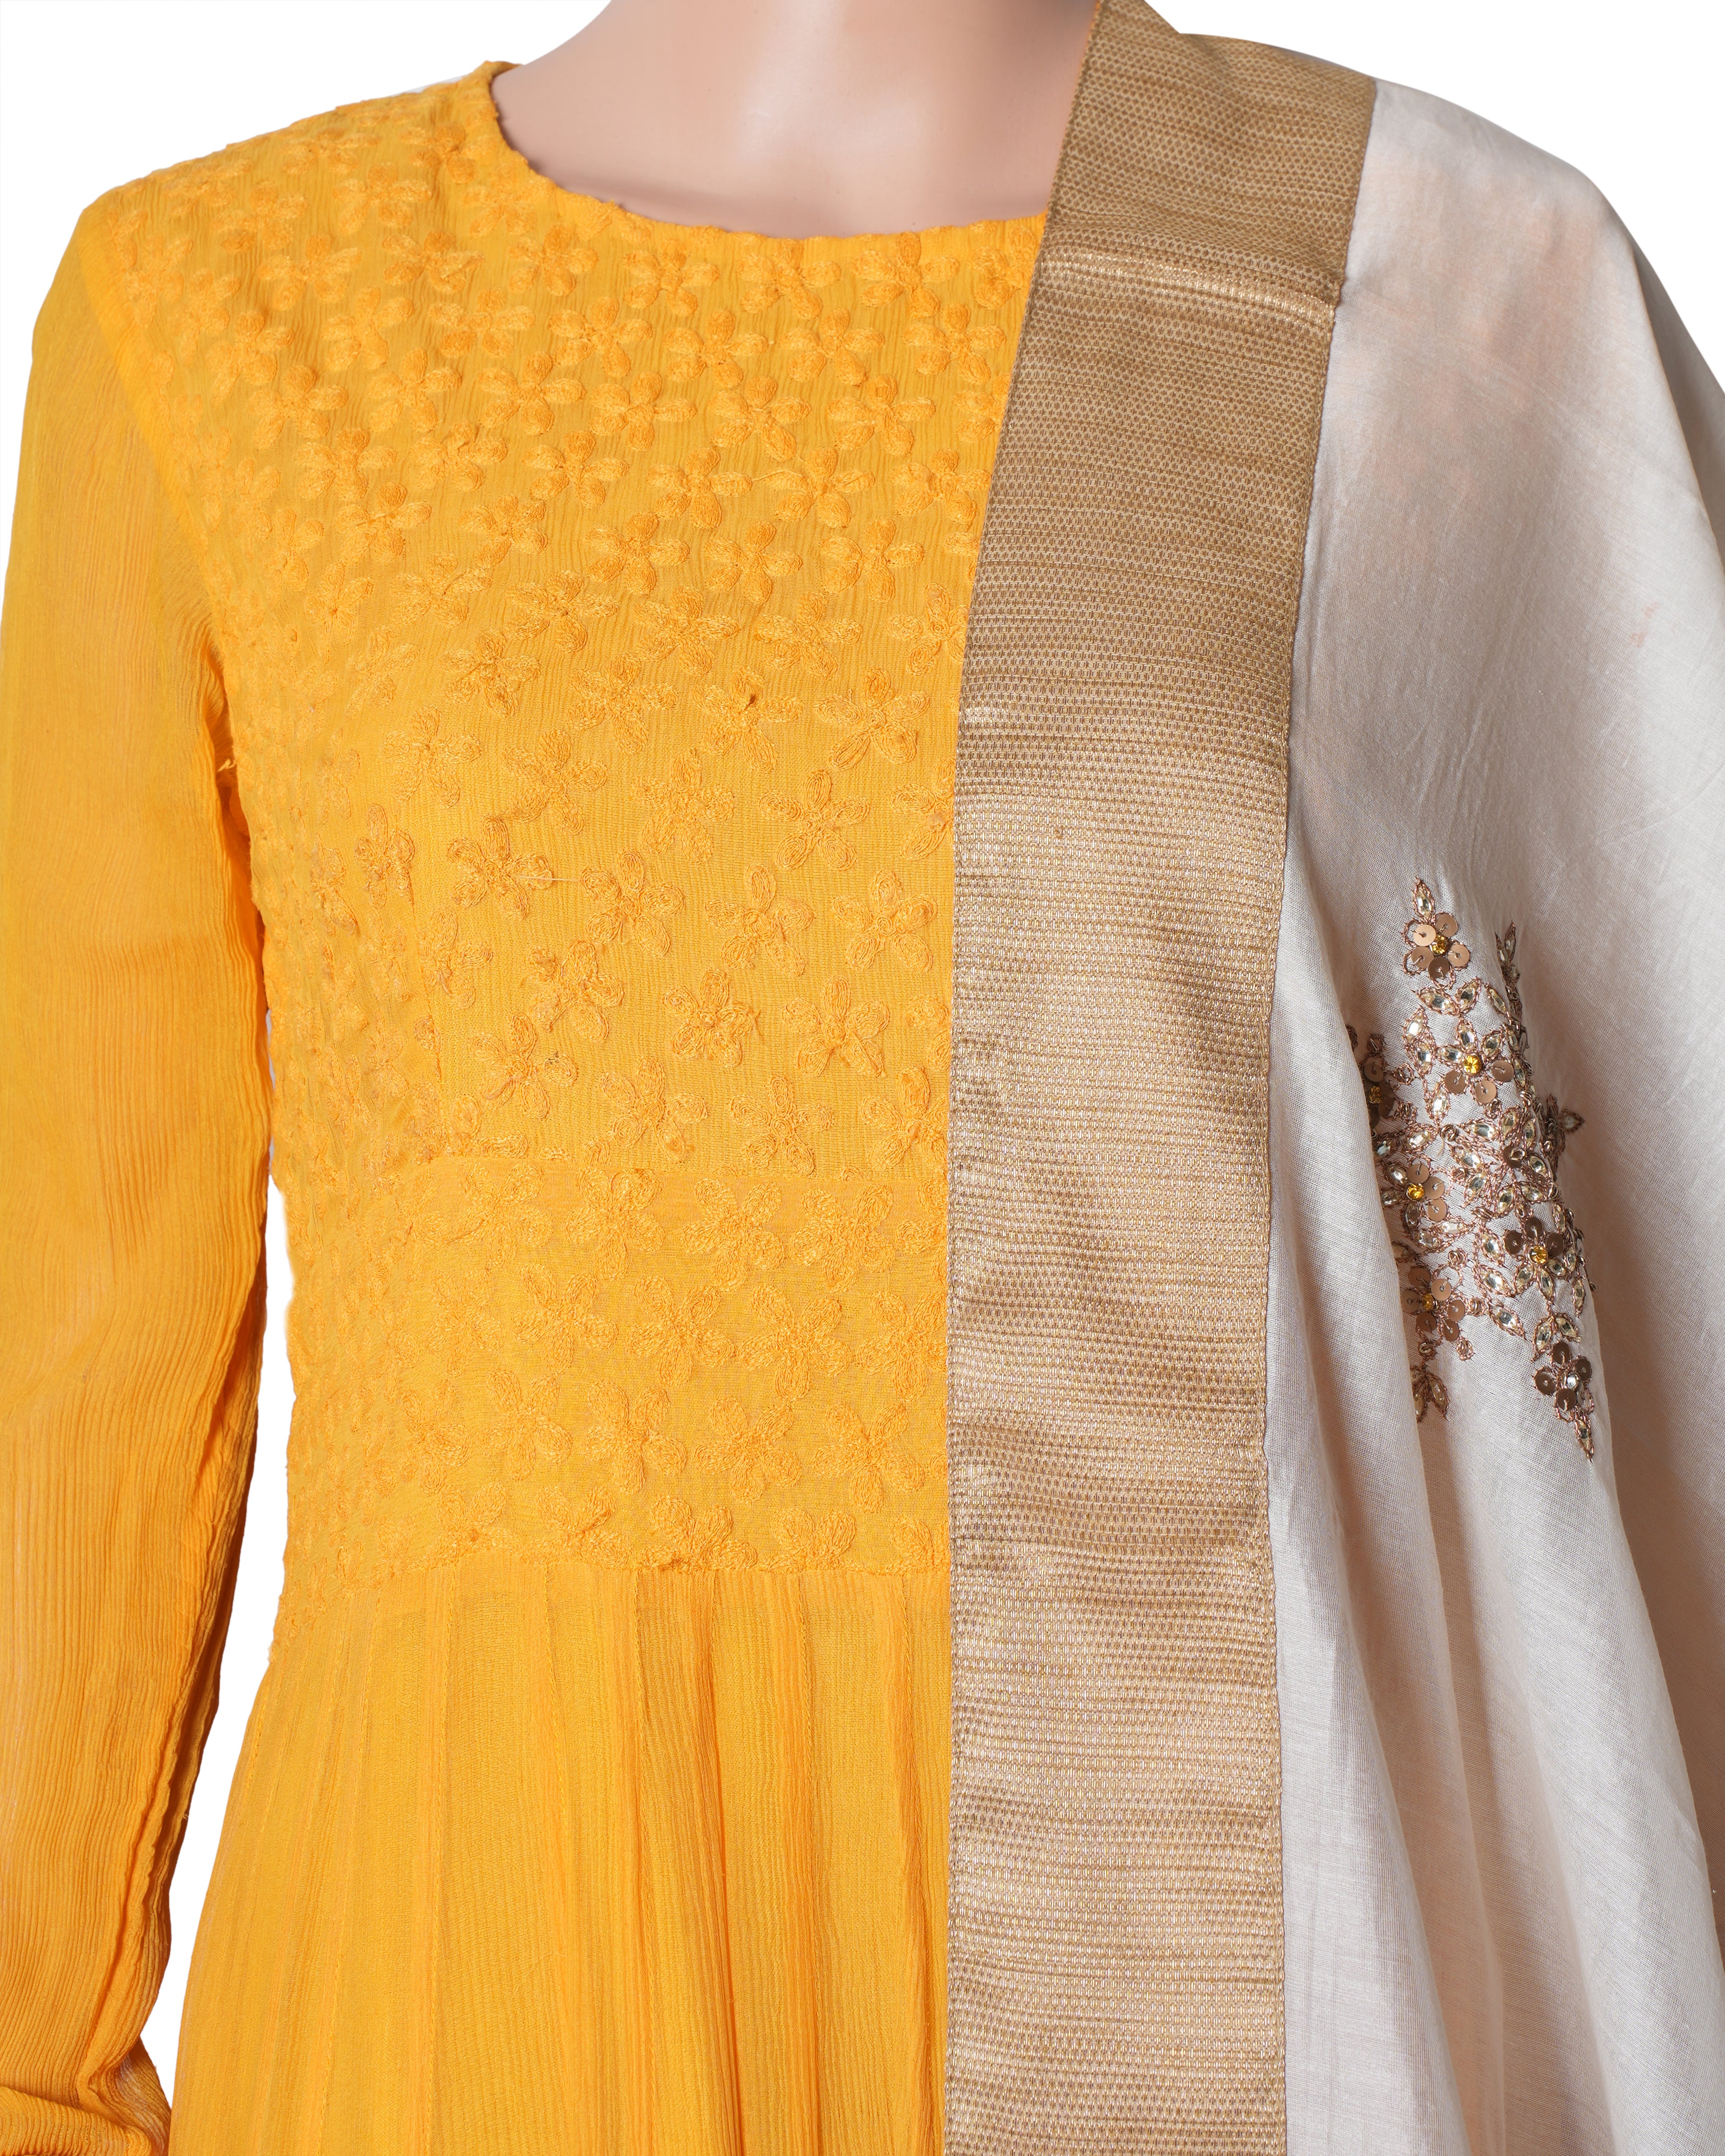 Lace Work On Yellow Designer Anarkali Salwar Kameez In Banglori Silk Fabric